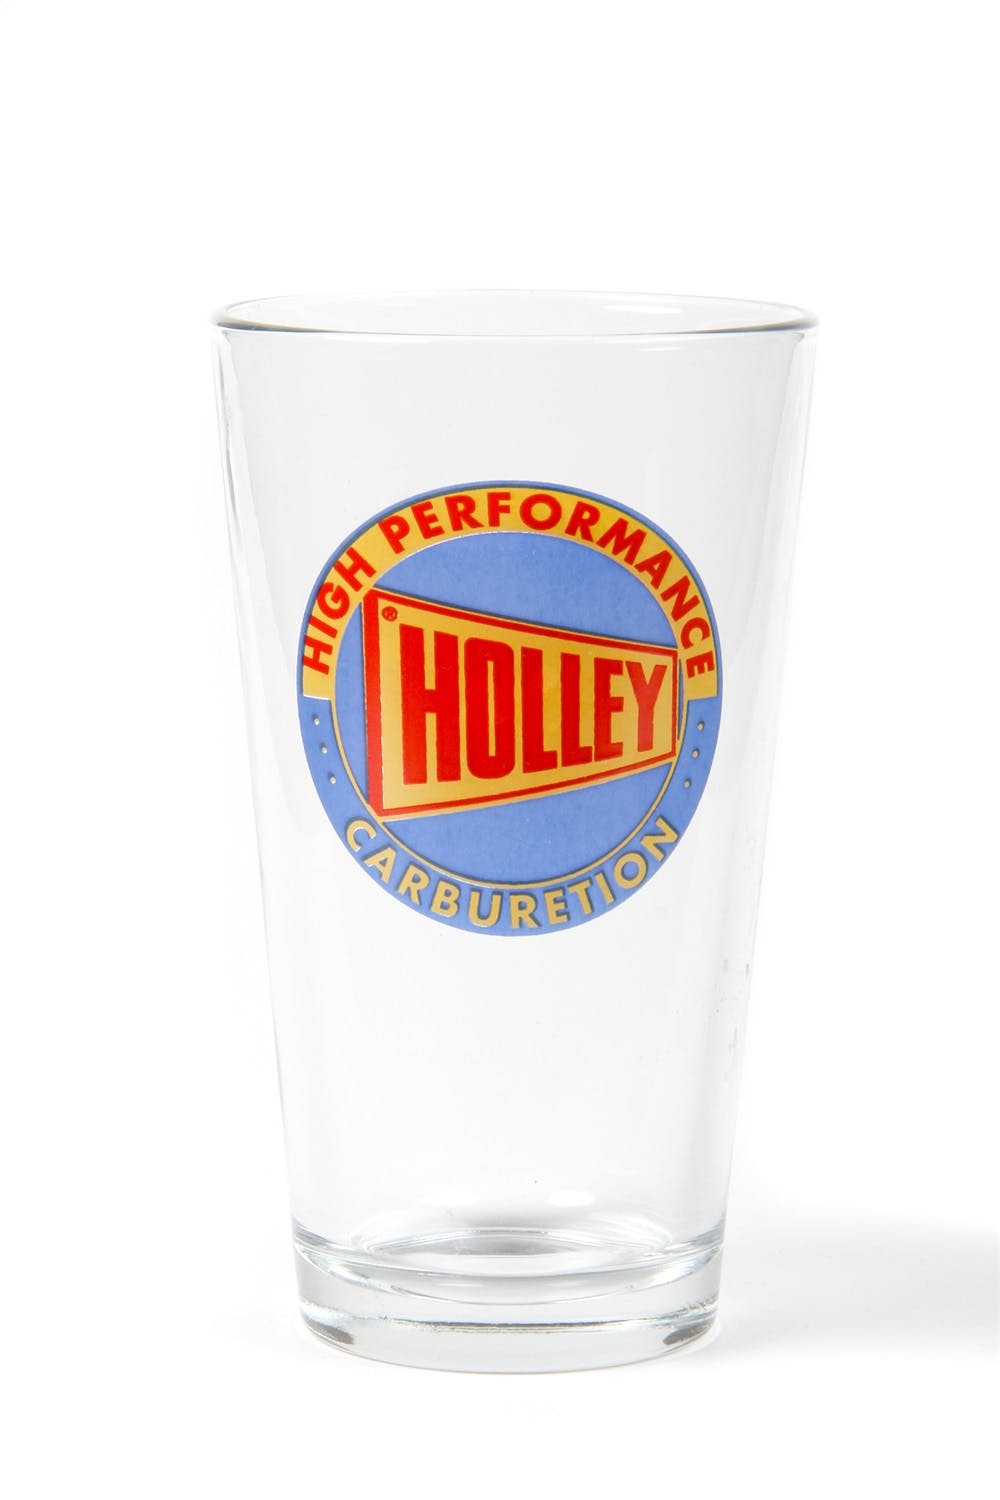 Holley 36-431 16oz Pub Glasses Assortment w/Holley Round Logo 4PK